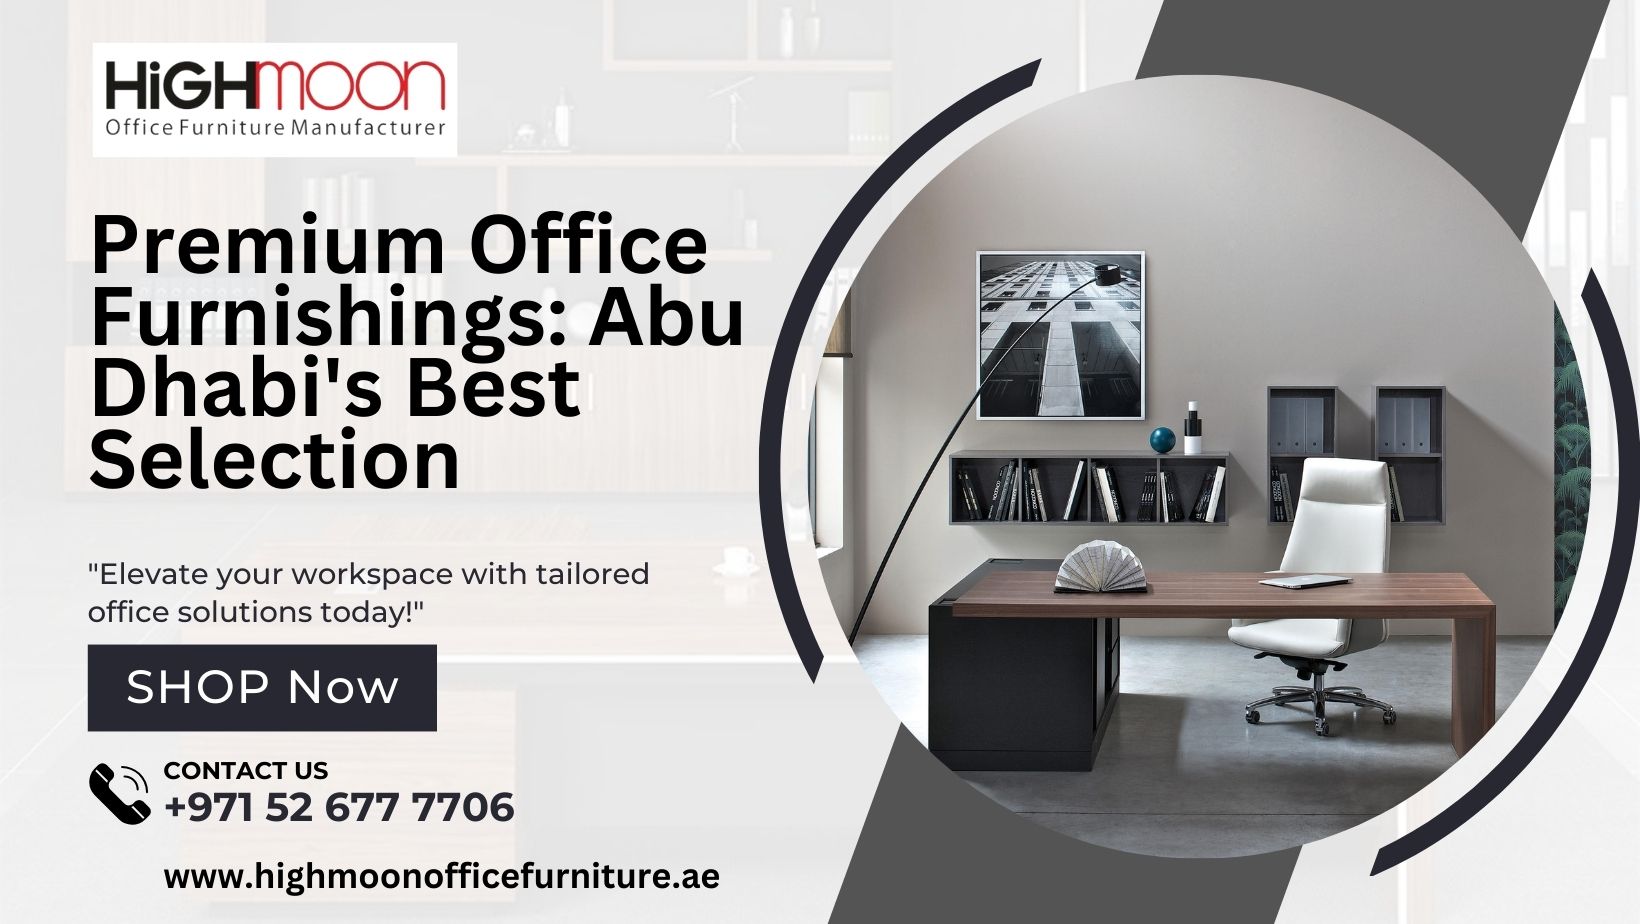 Abu Dhabi office furnishings